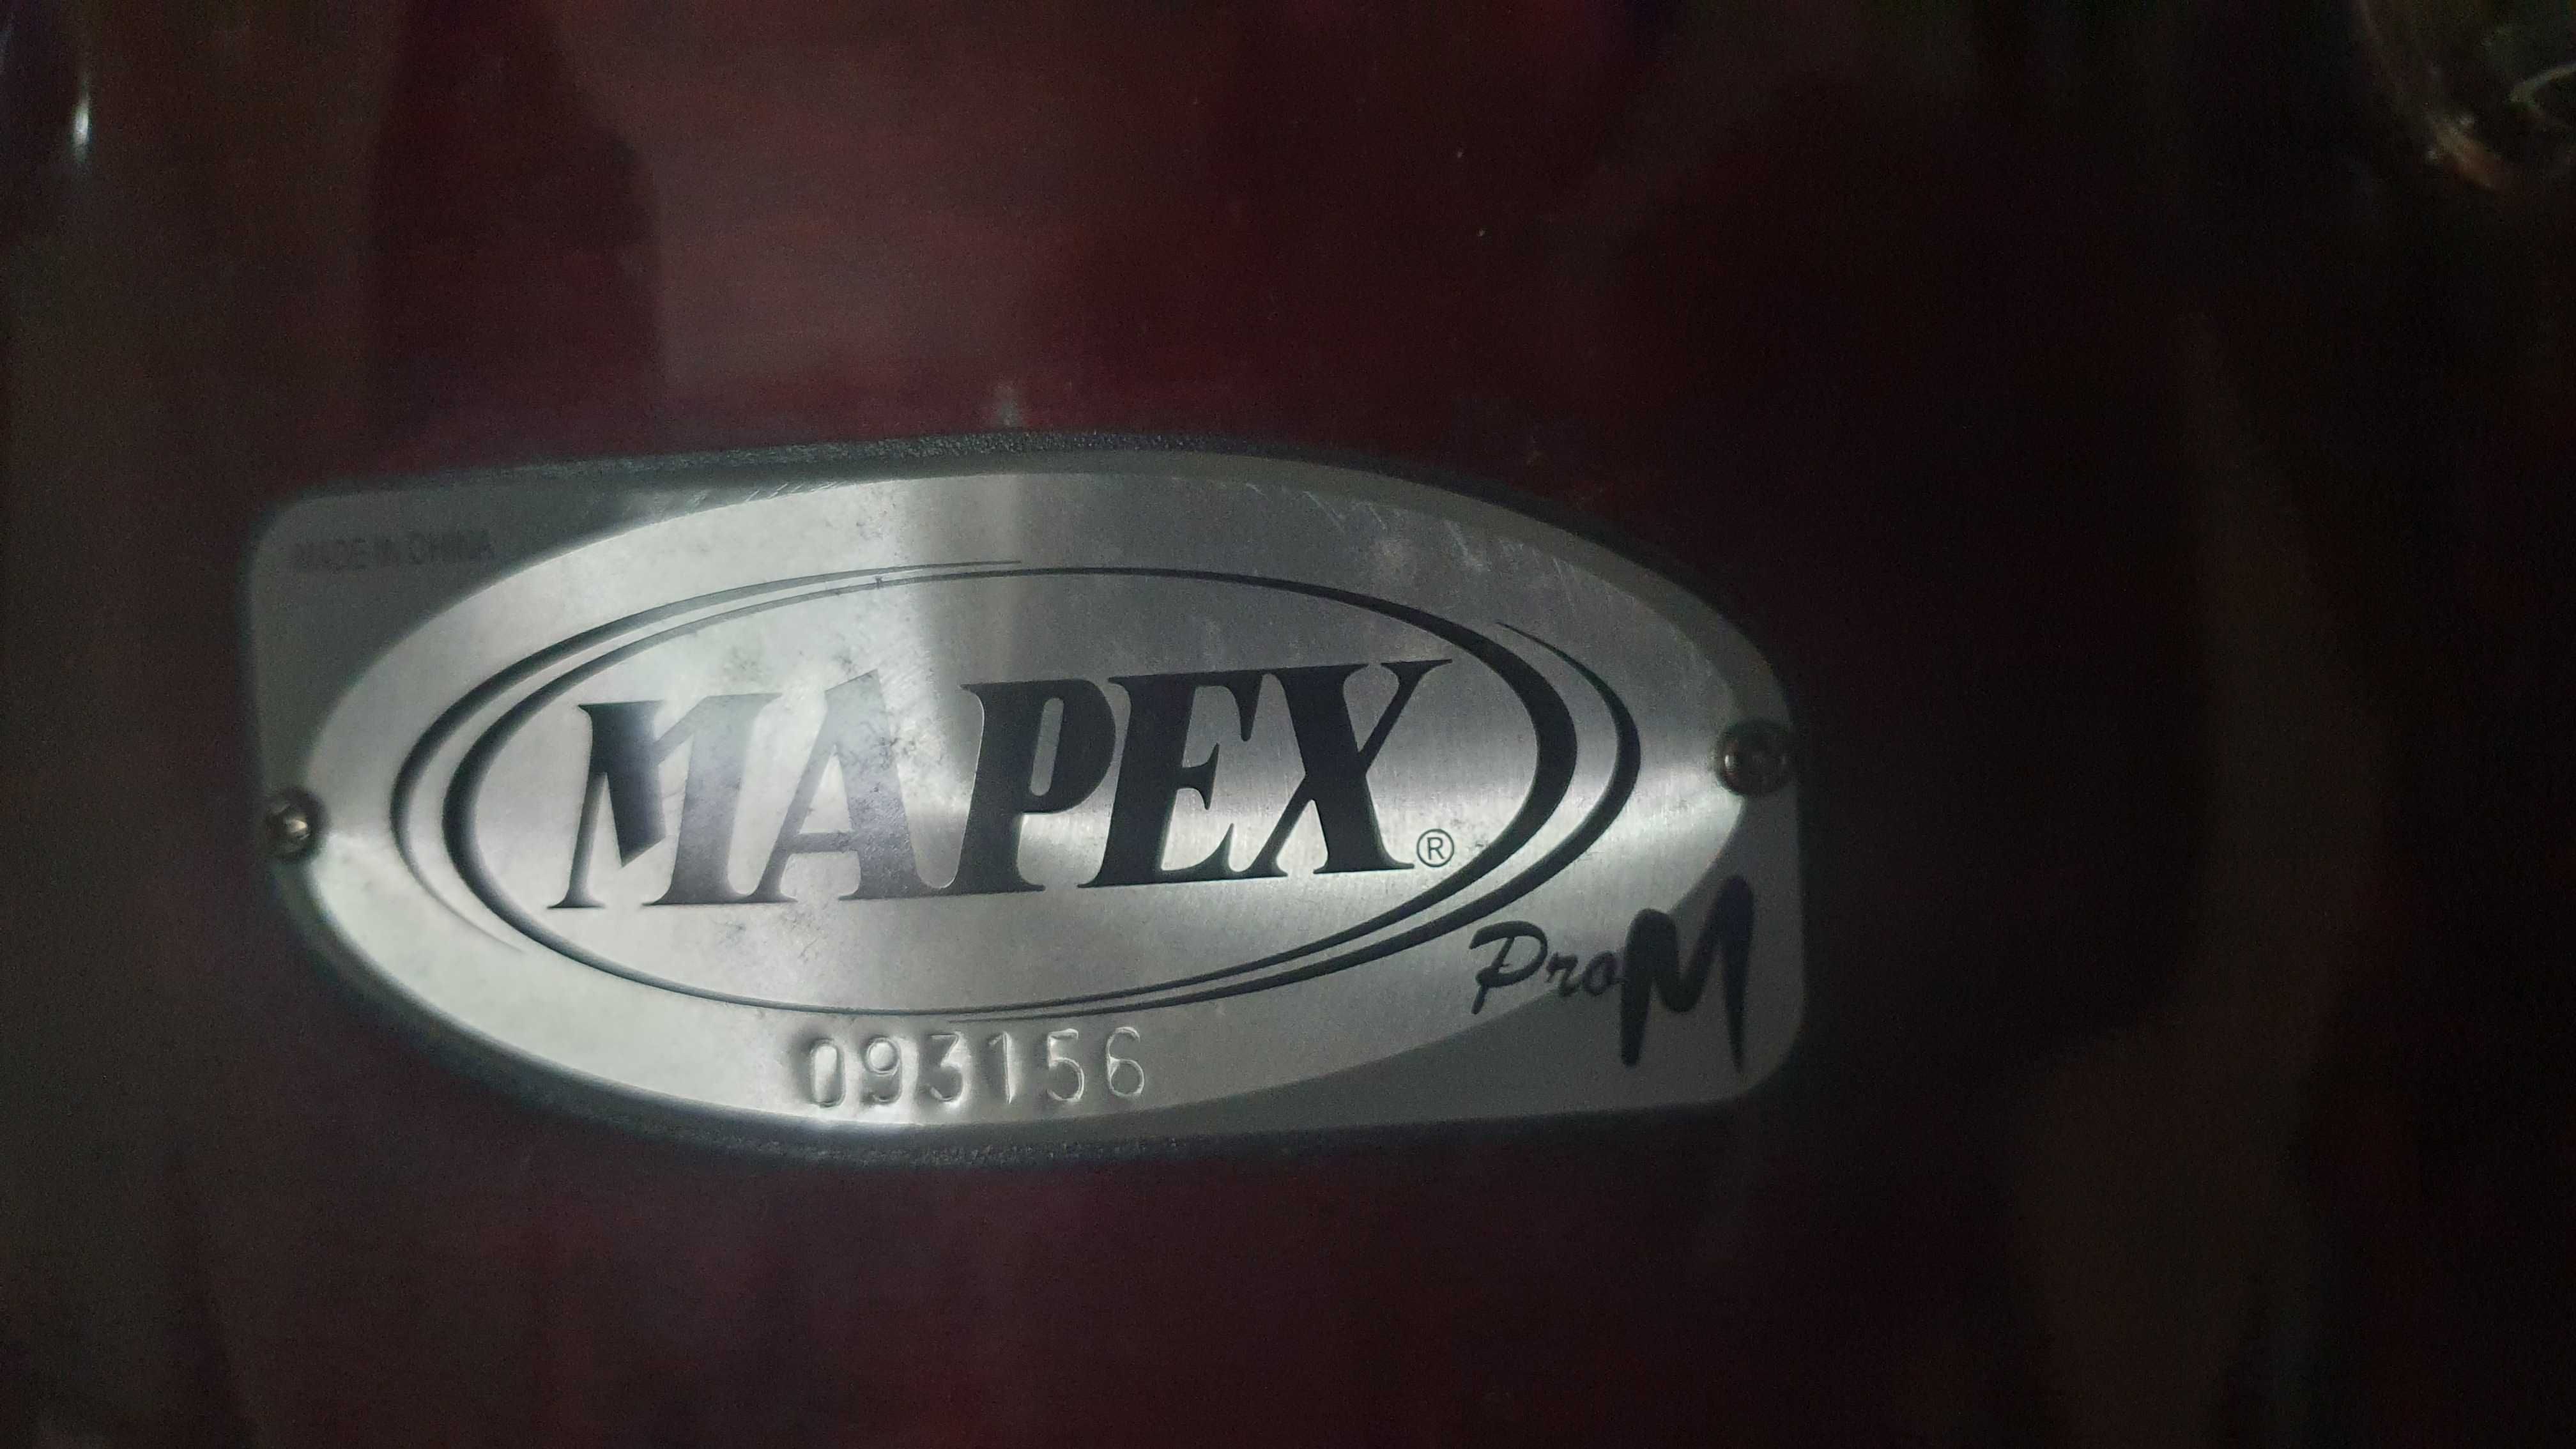 Zestaw perkusyjny Mapex Pro M + statywy - jak nowa.